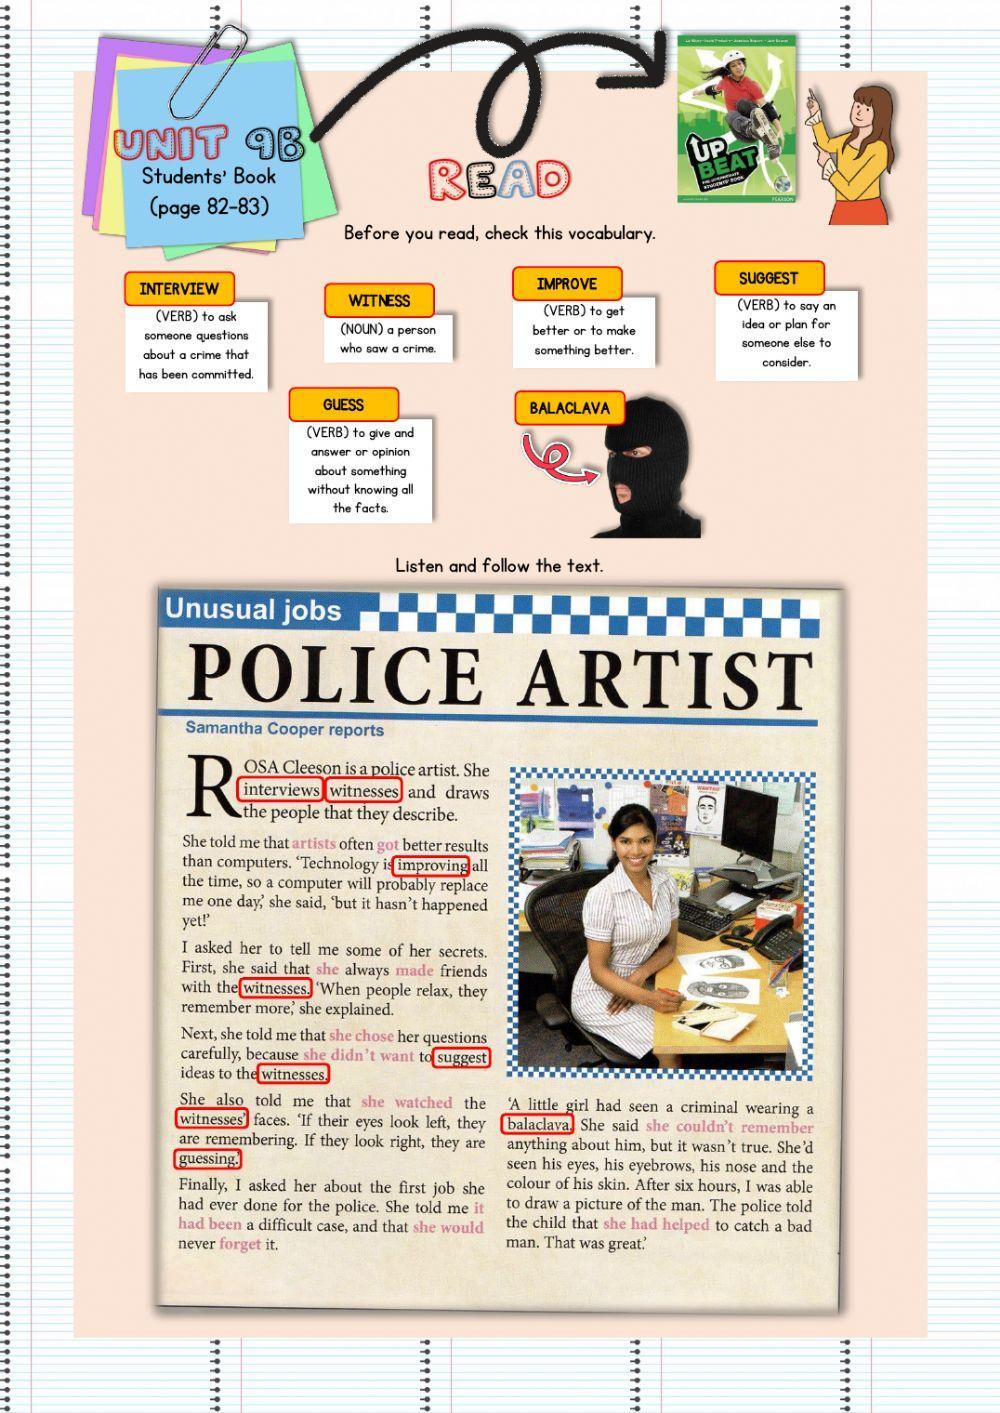 UNIT 9B: Police Artist